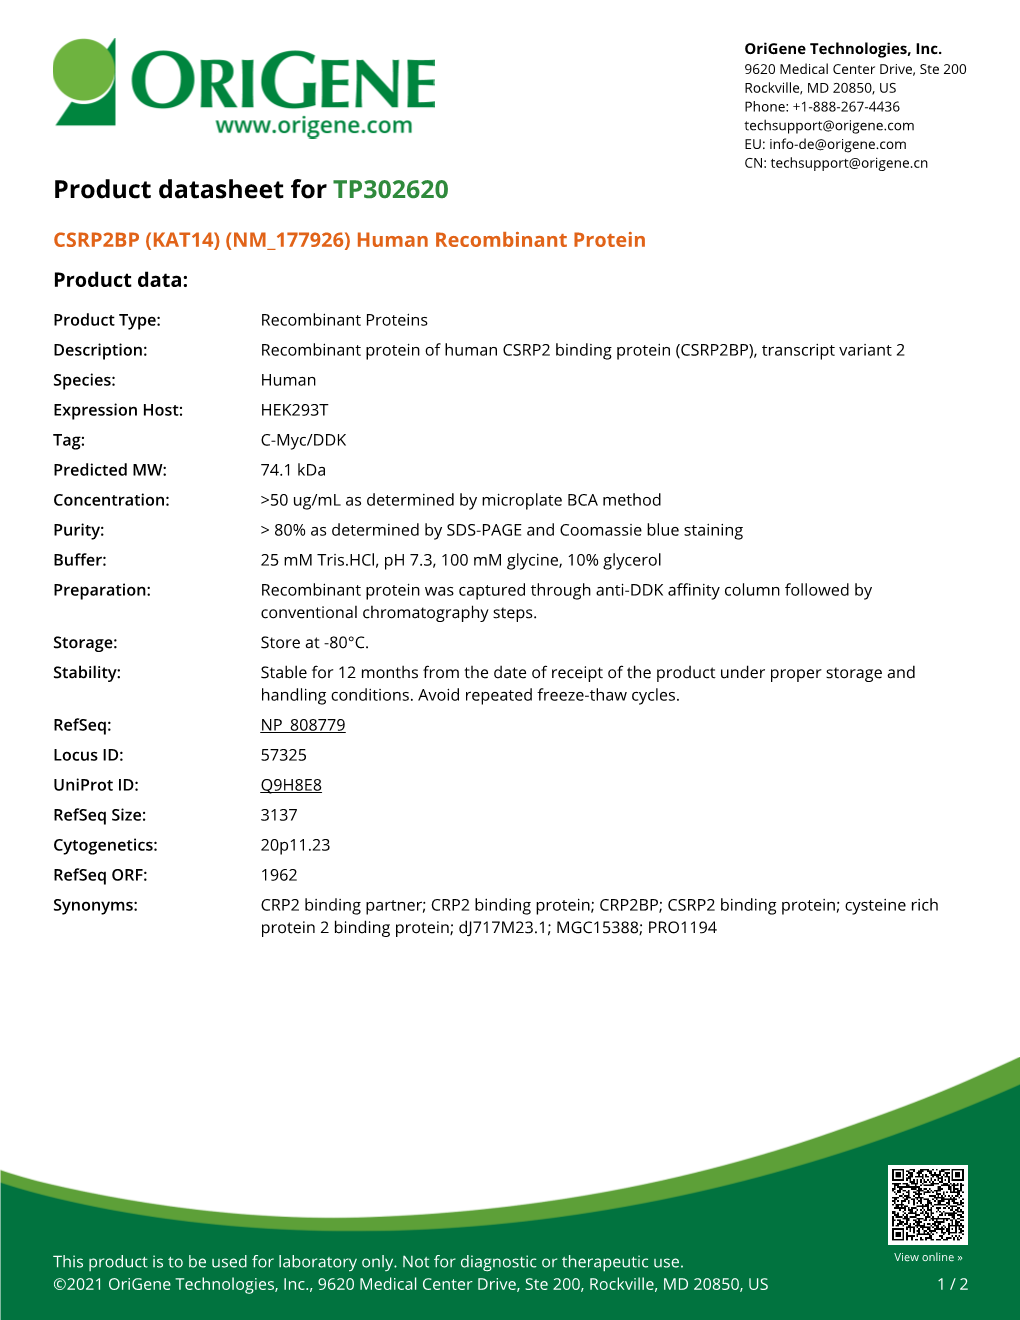 CSRP2BP (KAT14) (NM 177926) Human Recombinant Protein Product Data